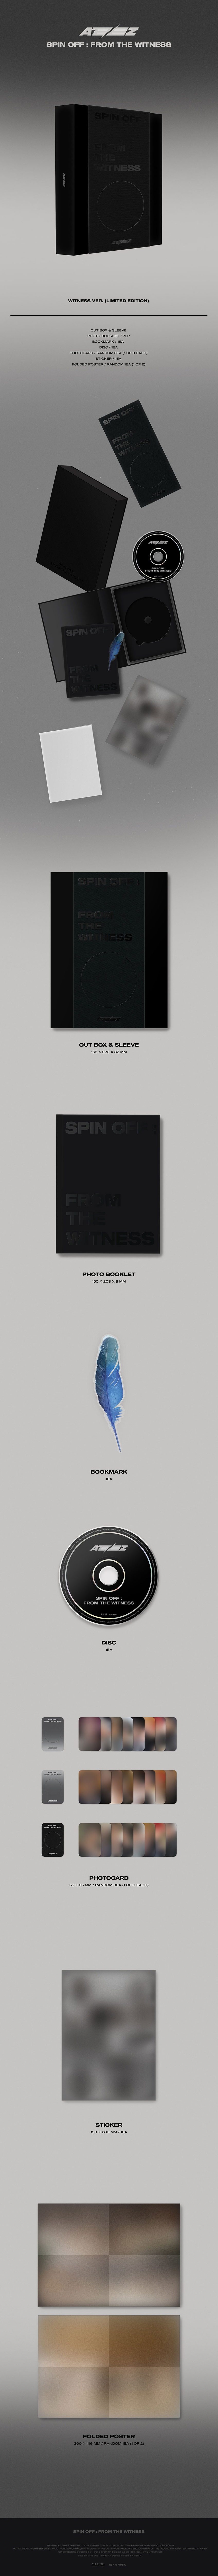 ATEEZ - SPIN OFF: FROM THE WITNESS Set (شاهد الإصدار + 2 من ألبومات بوكا) | شركة ديباك